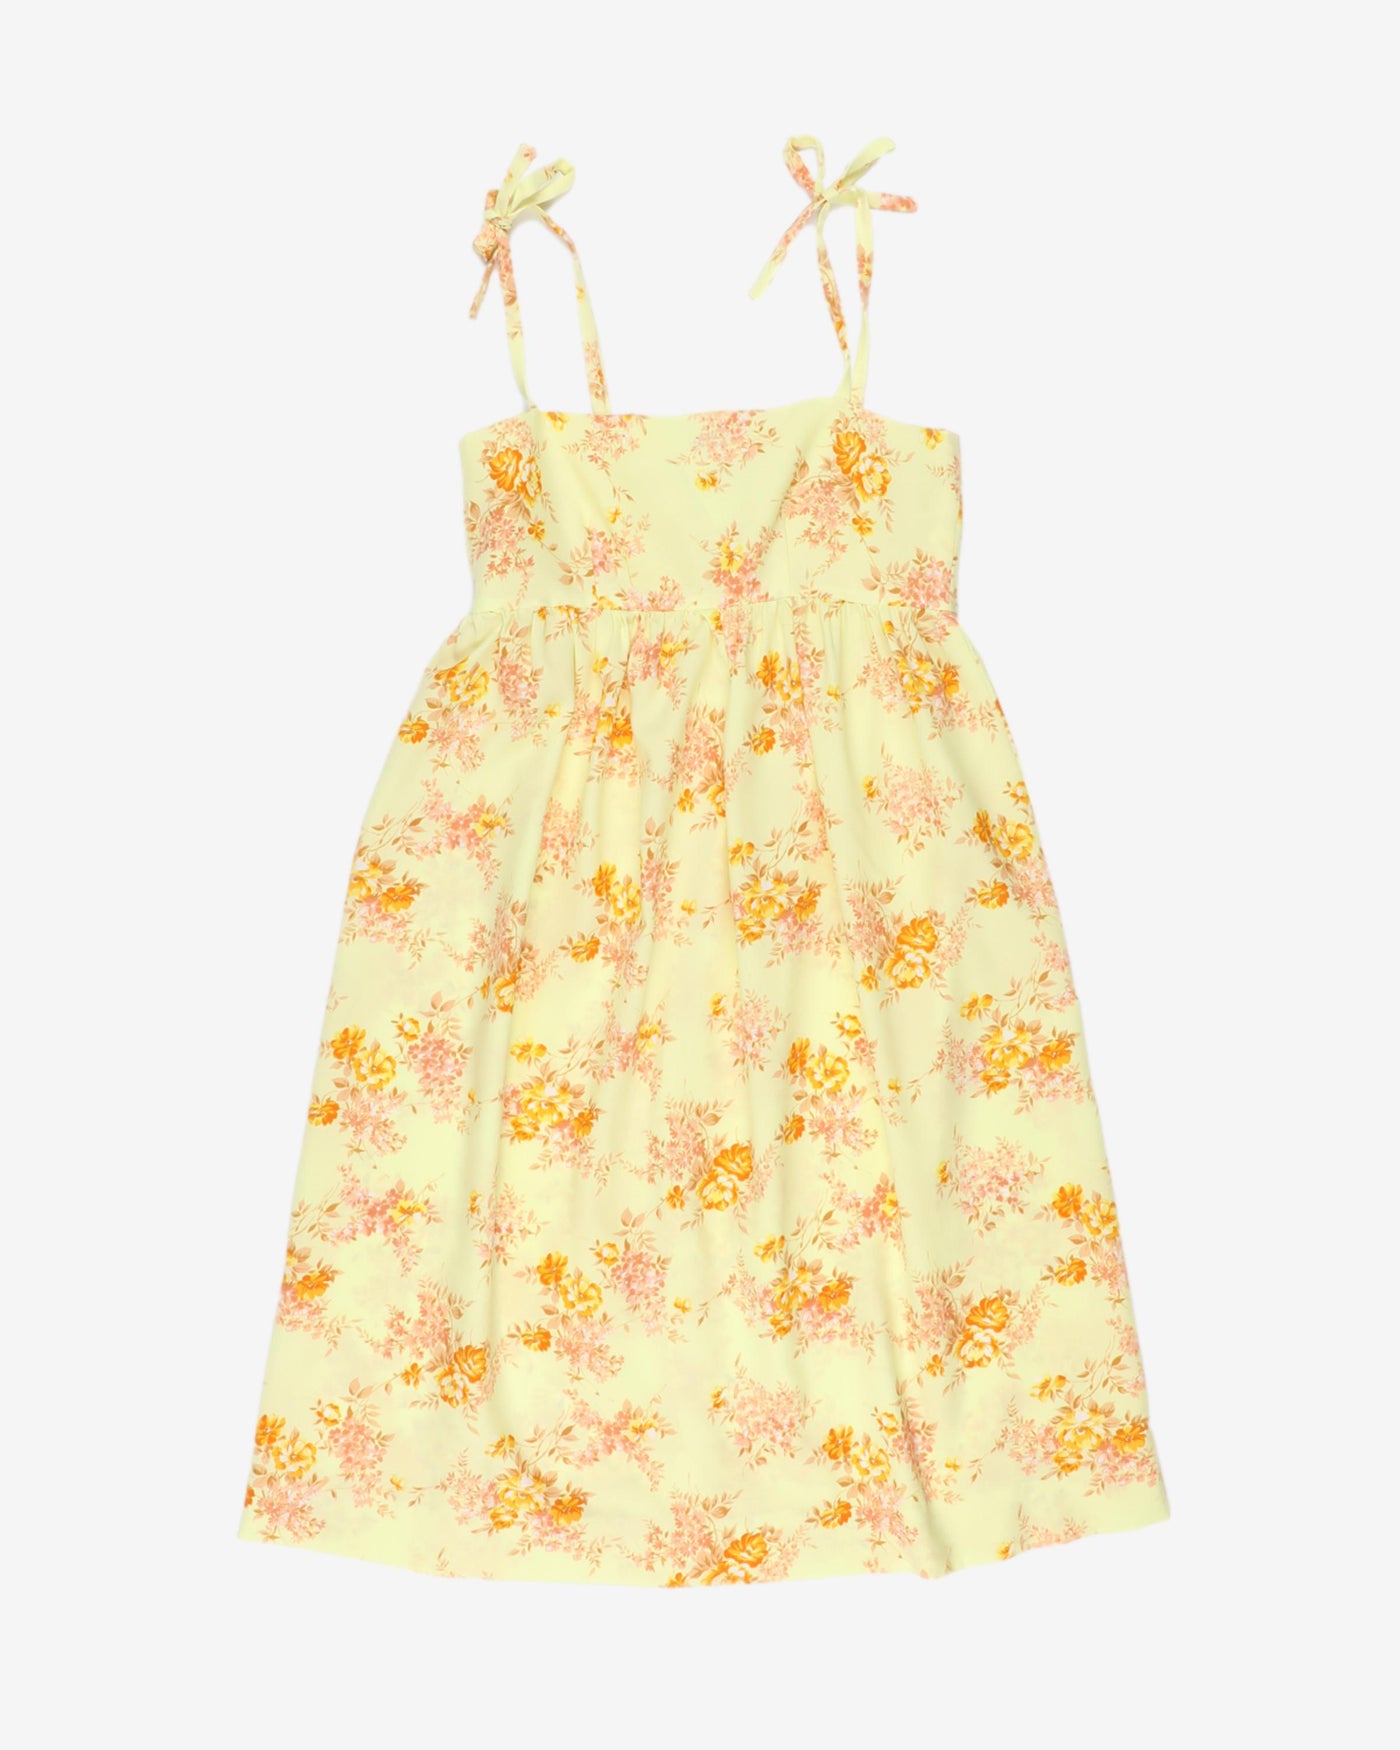 1970s yellow flower pattern dress - Xs